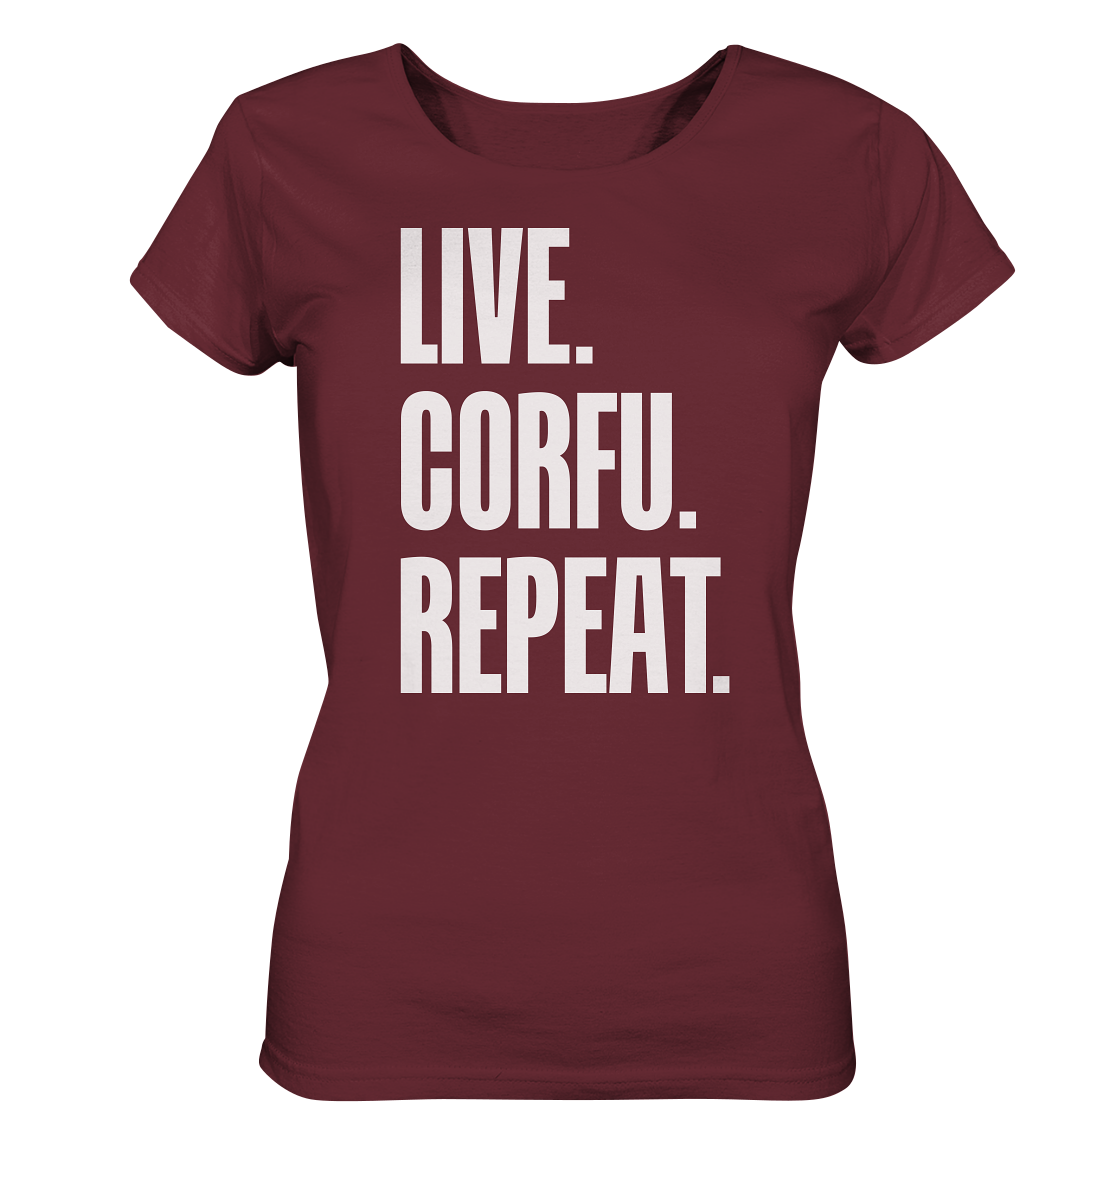 LIVE. CORFU. REPEAT. - Ladies Organic Shirt